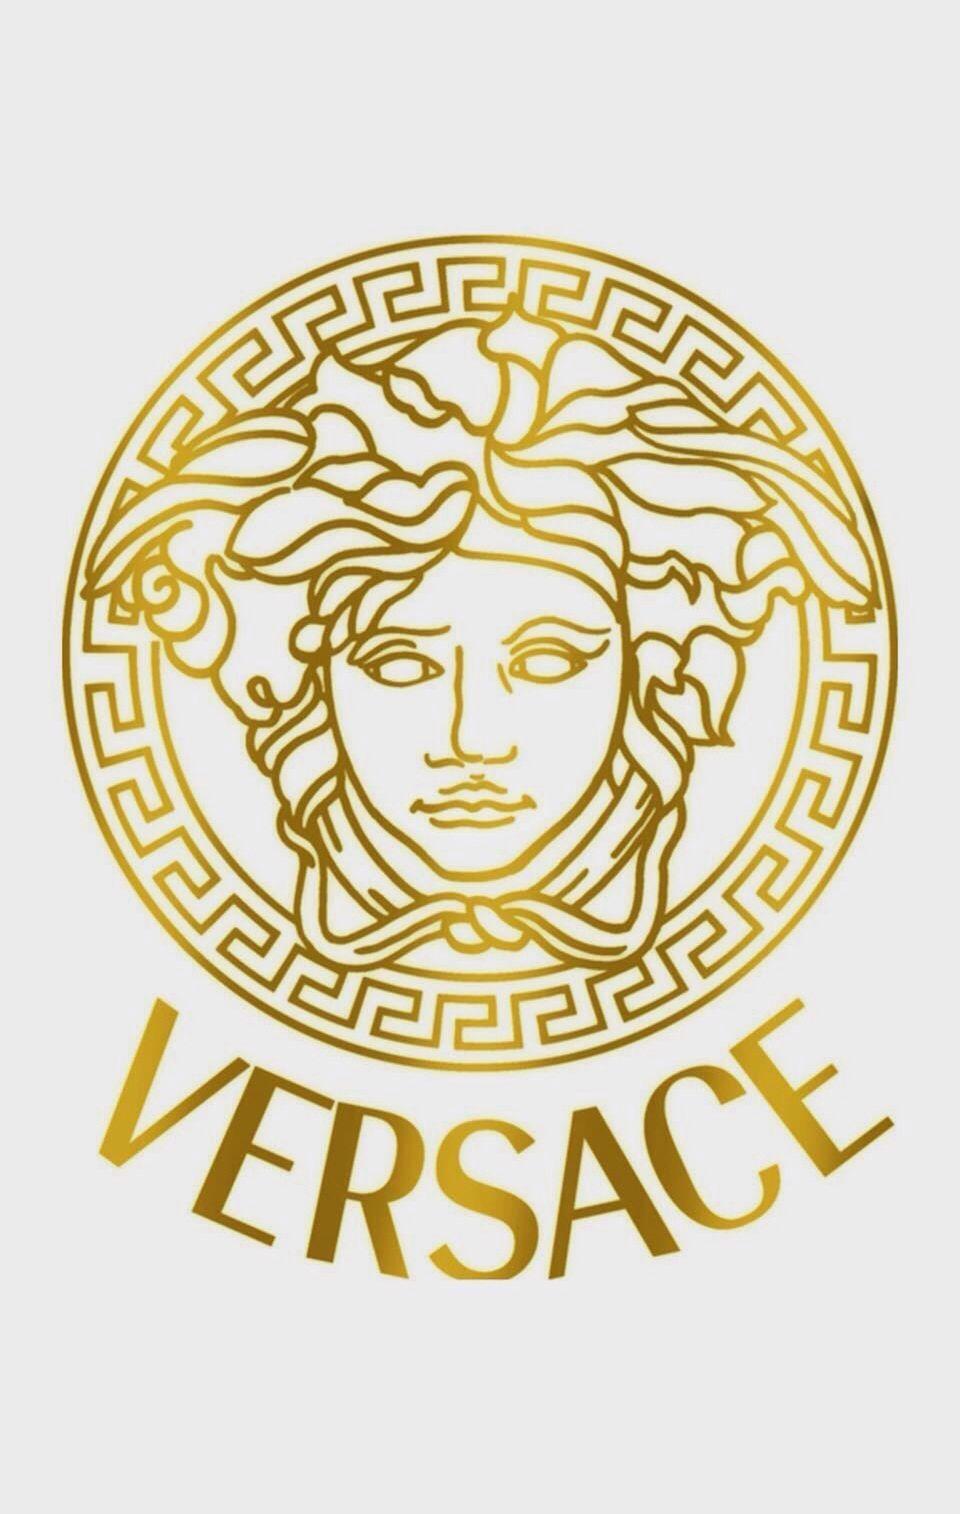 Versace iPhone Wallpapers - Top Free Versace iPhone Backgrounds ...